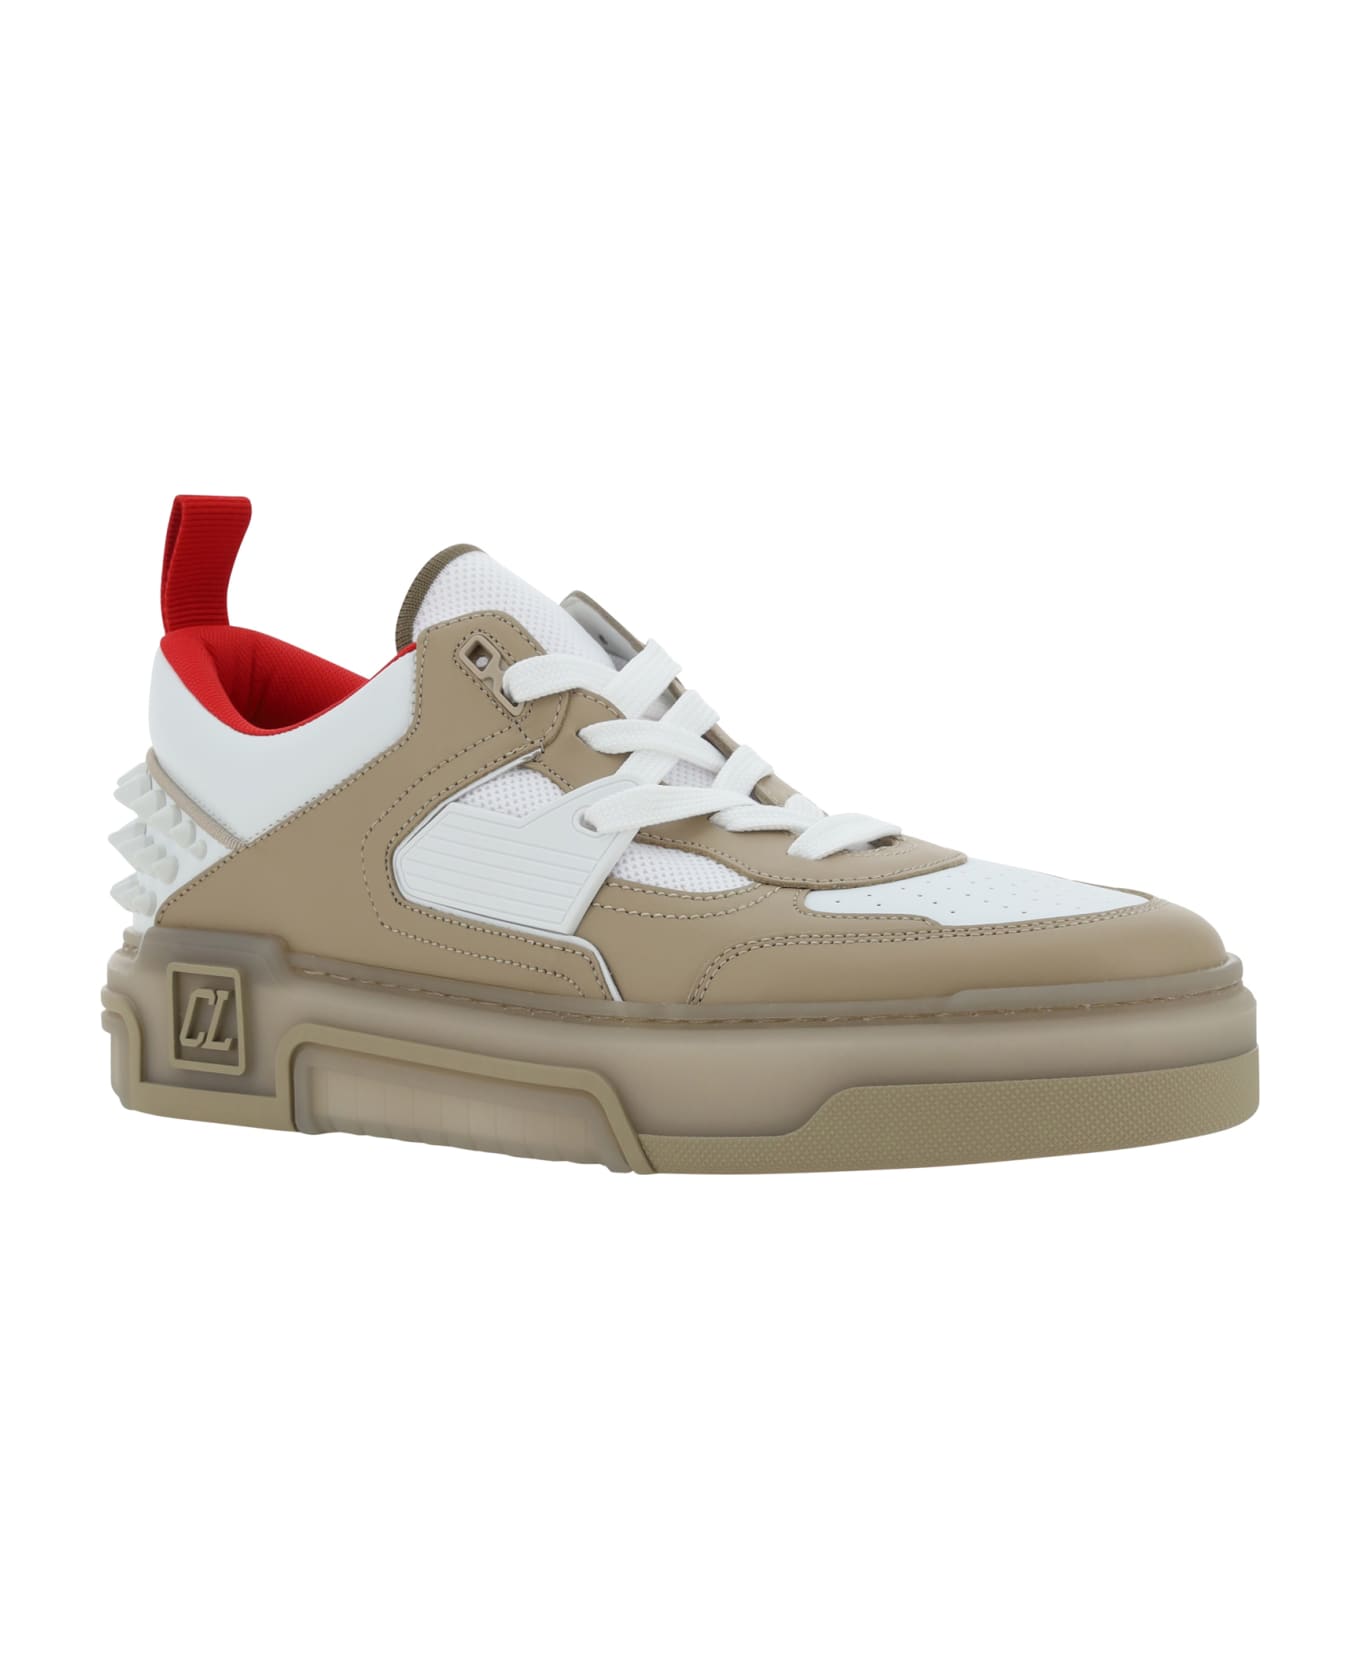 Christian Louboutin Astroloubi Sneakers - Saharienne/white スニーカー